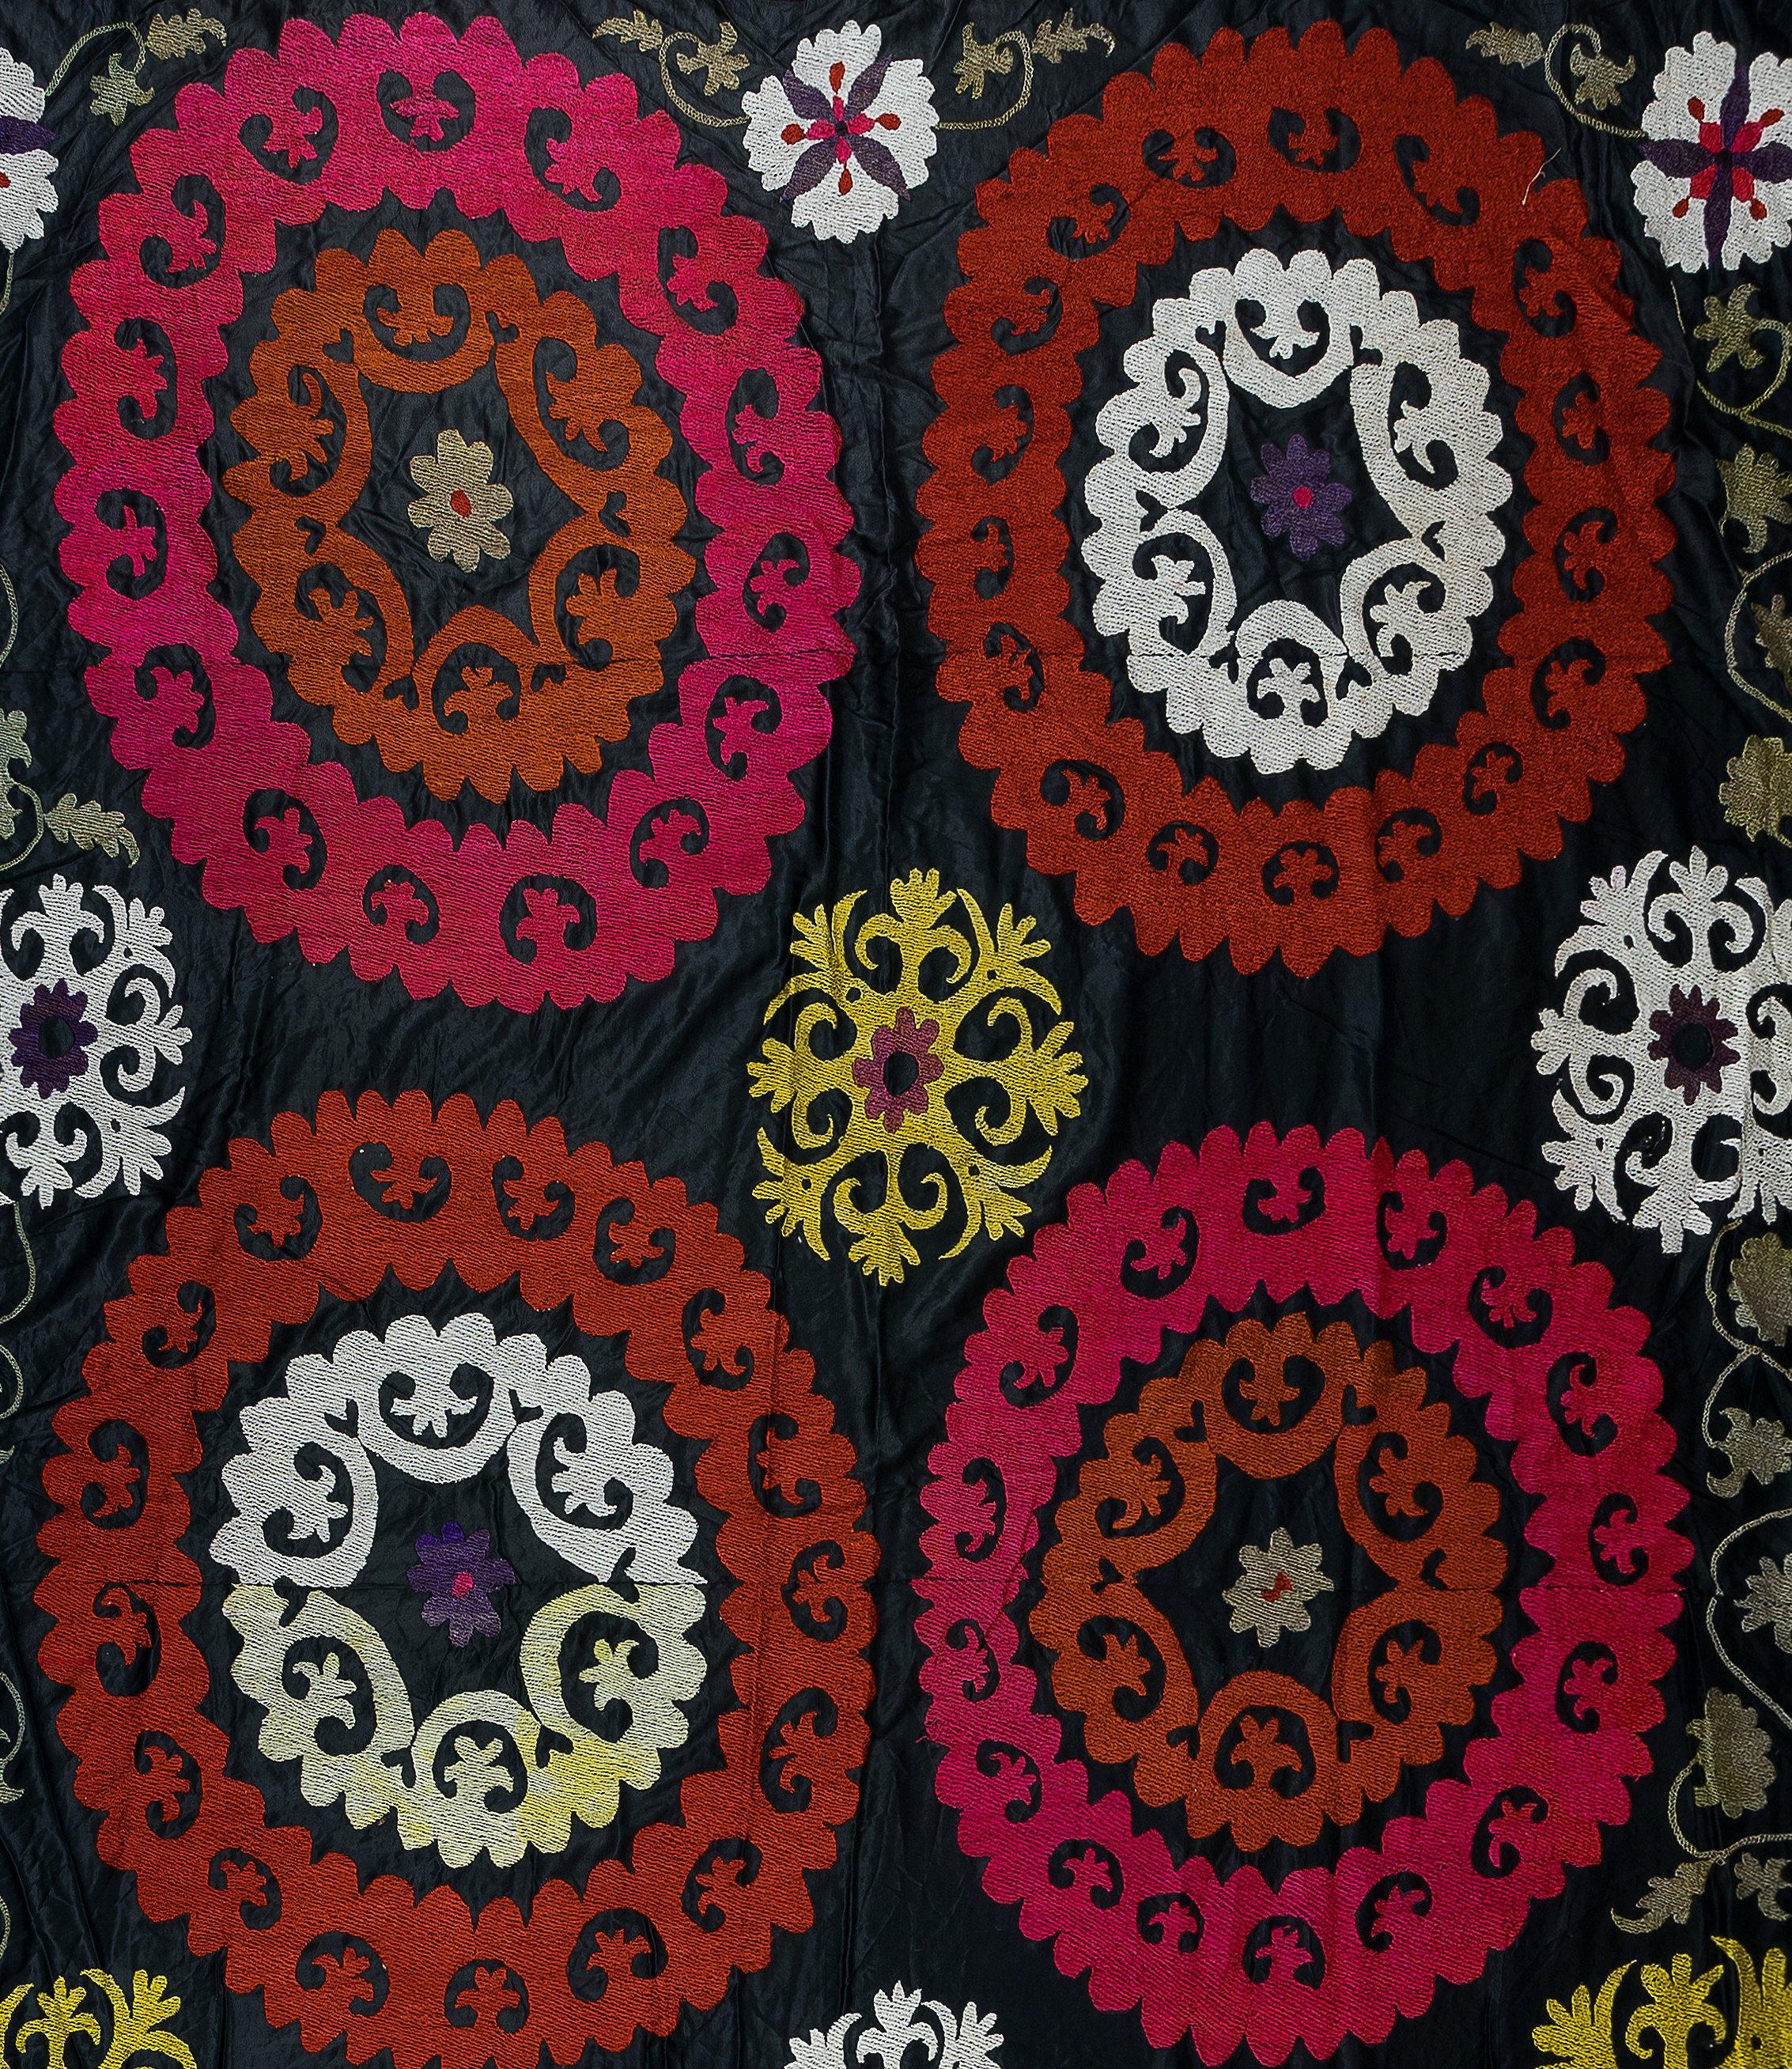 Uzbek 8.3x10.7 Ft Vintage Silk Embroidery Bedspread, Central Asian Suzani Tablecloth For Sale